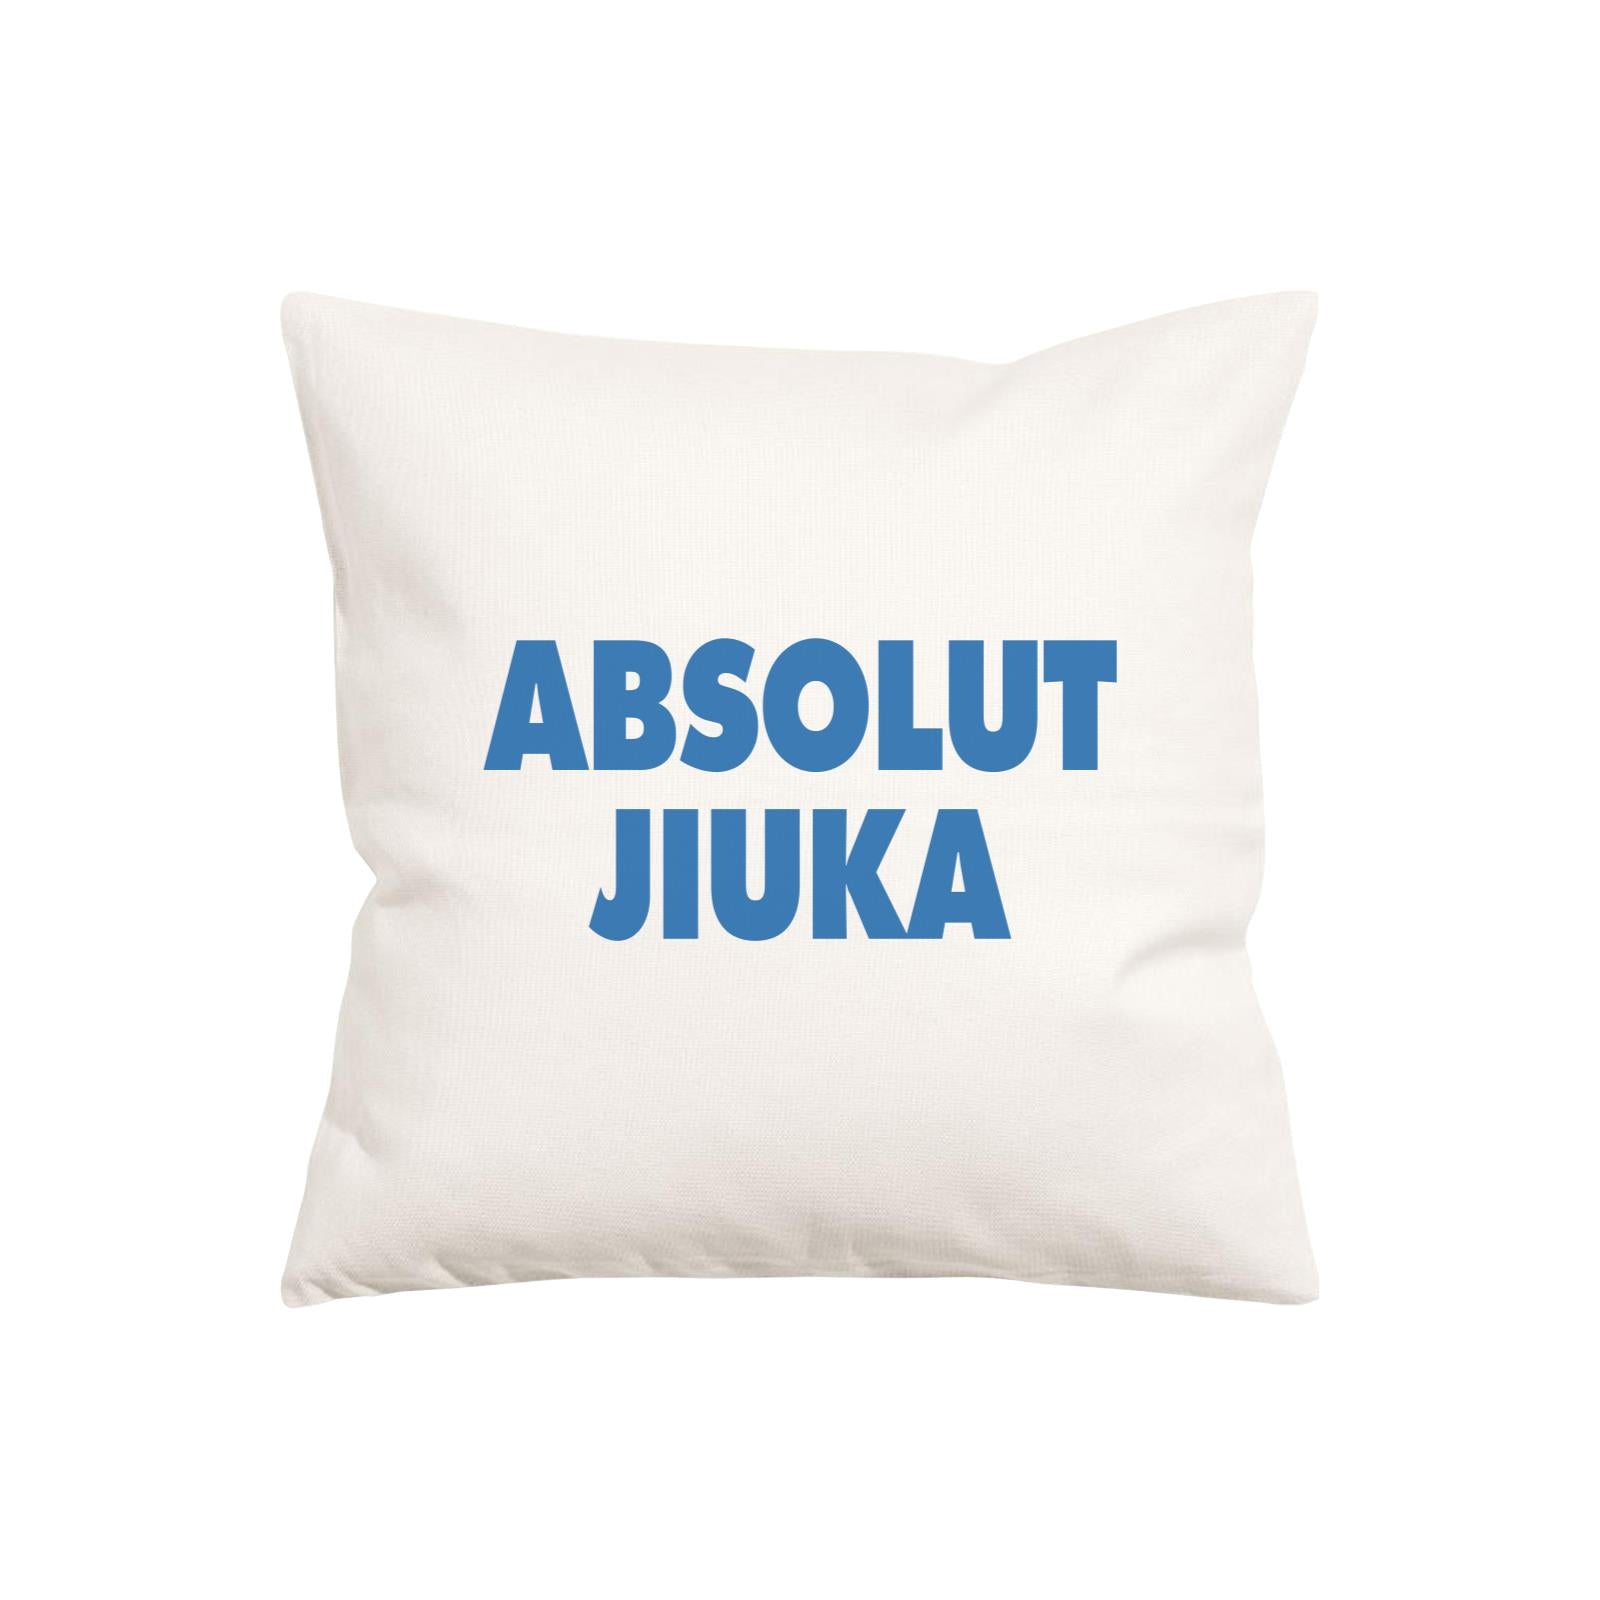 Slang Statement Absolut Jiuka Pillow Cushion